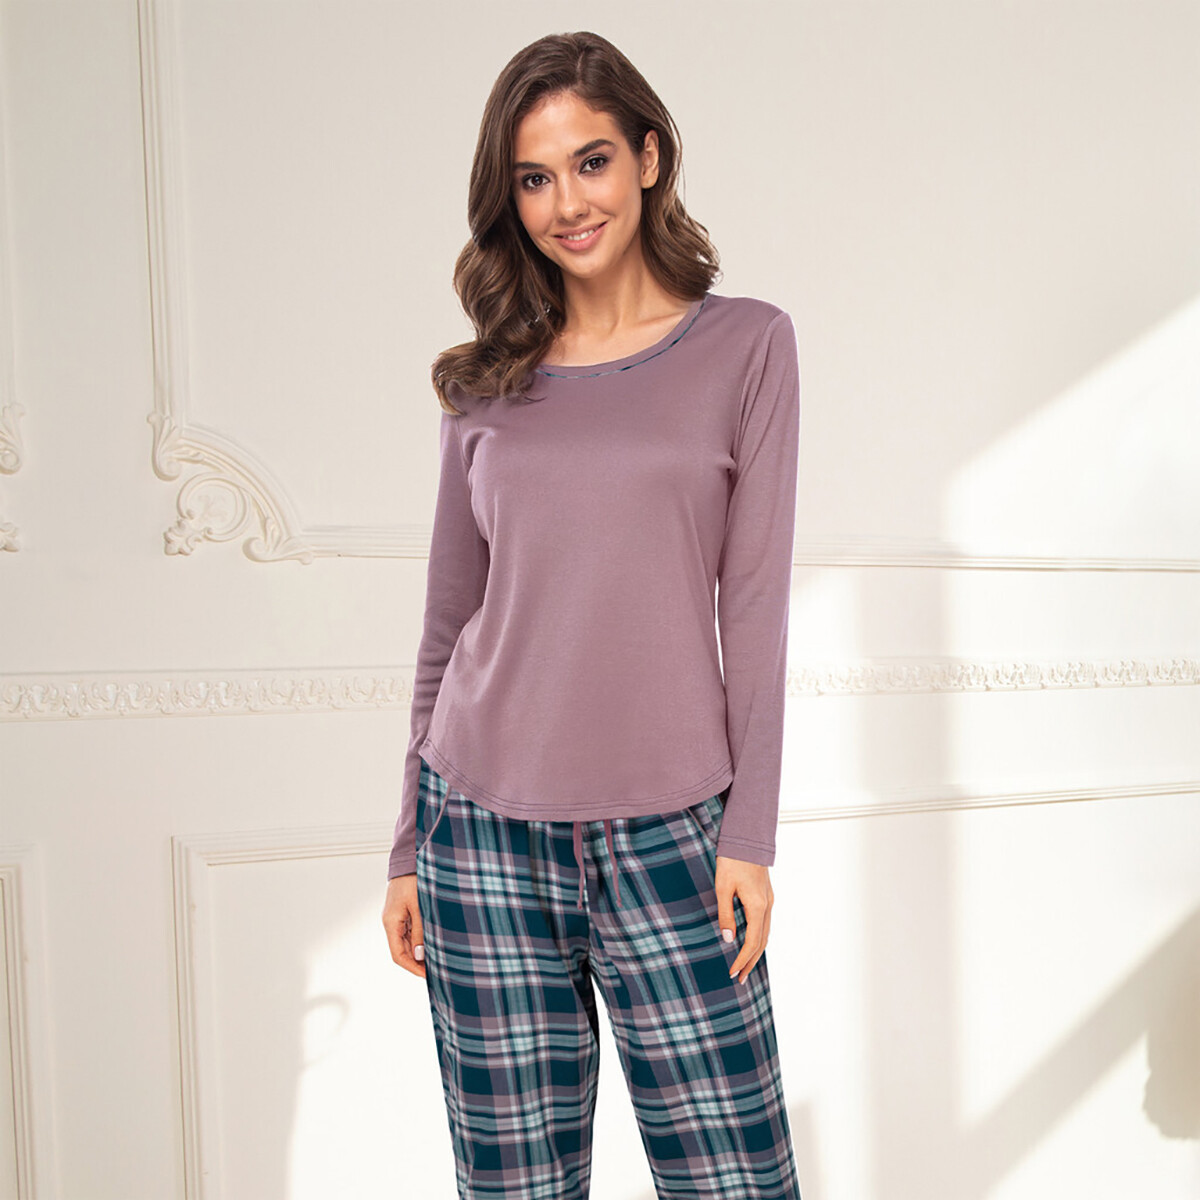 Lady Avenue Cotton Flannel Pyjamas, Farve: Winter Rose, Størrelse: L, Dame